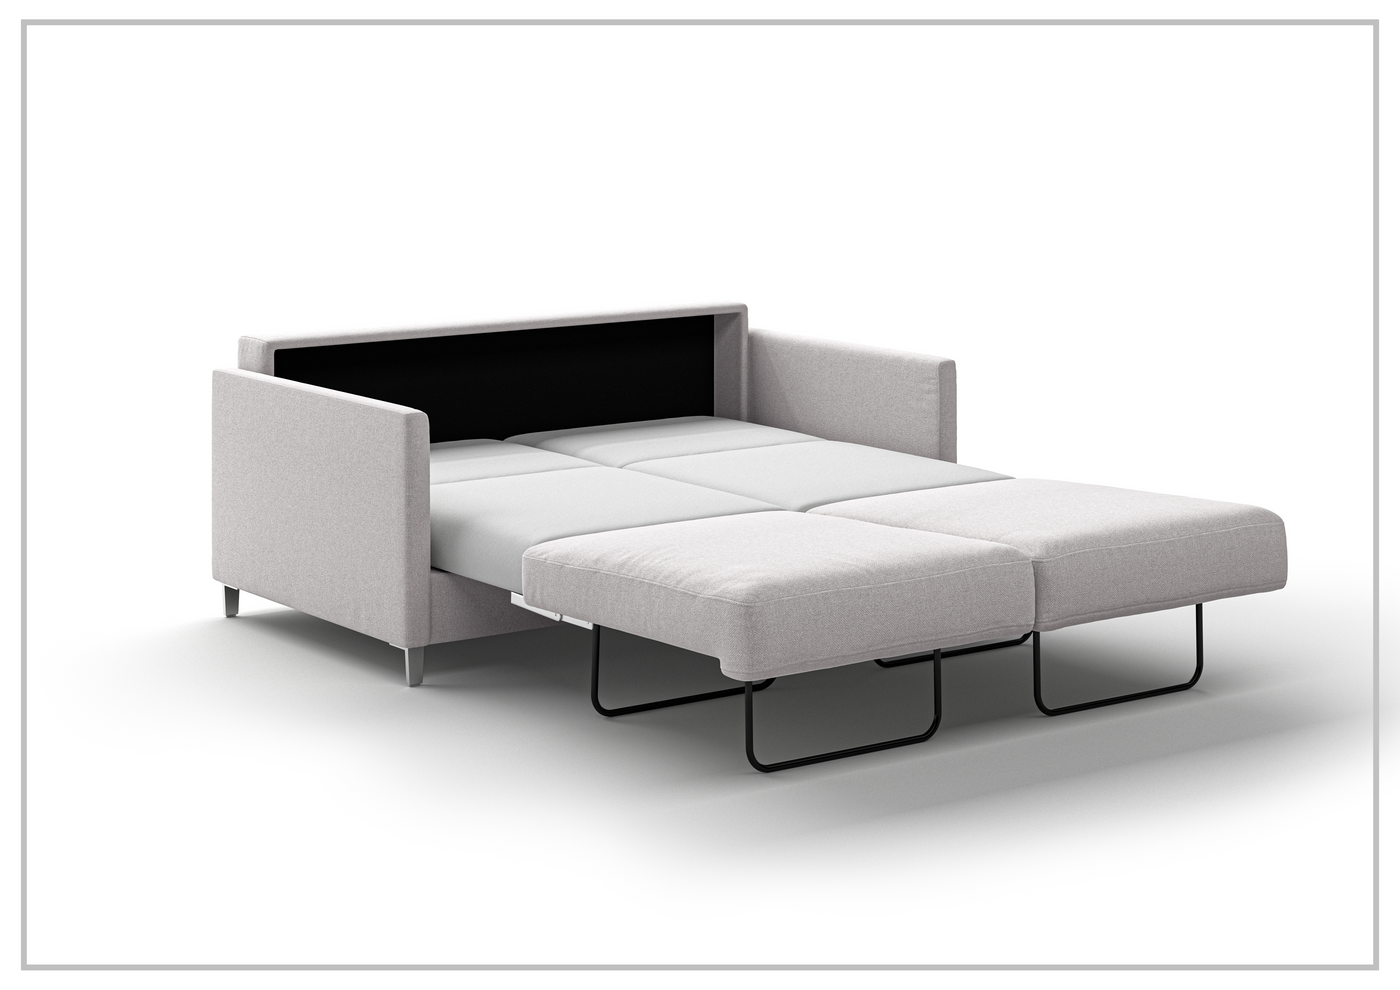 Luonto Elfin Queen Sleeper Sofa with Chrome or Wood Legs